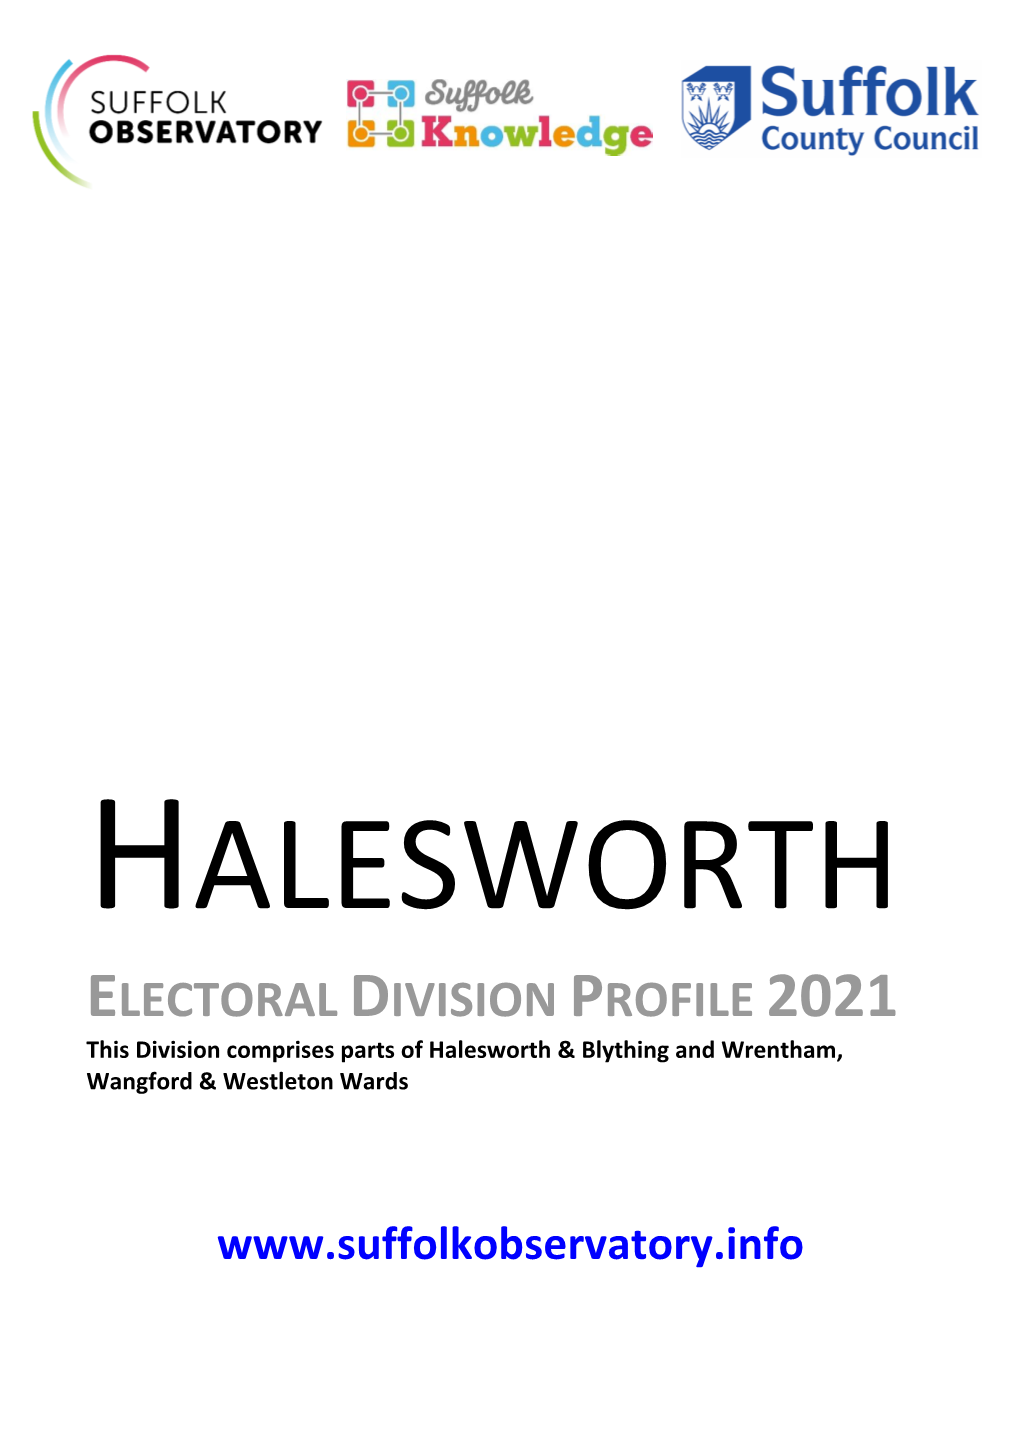 59 Halesworth